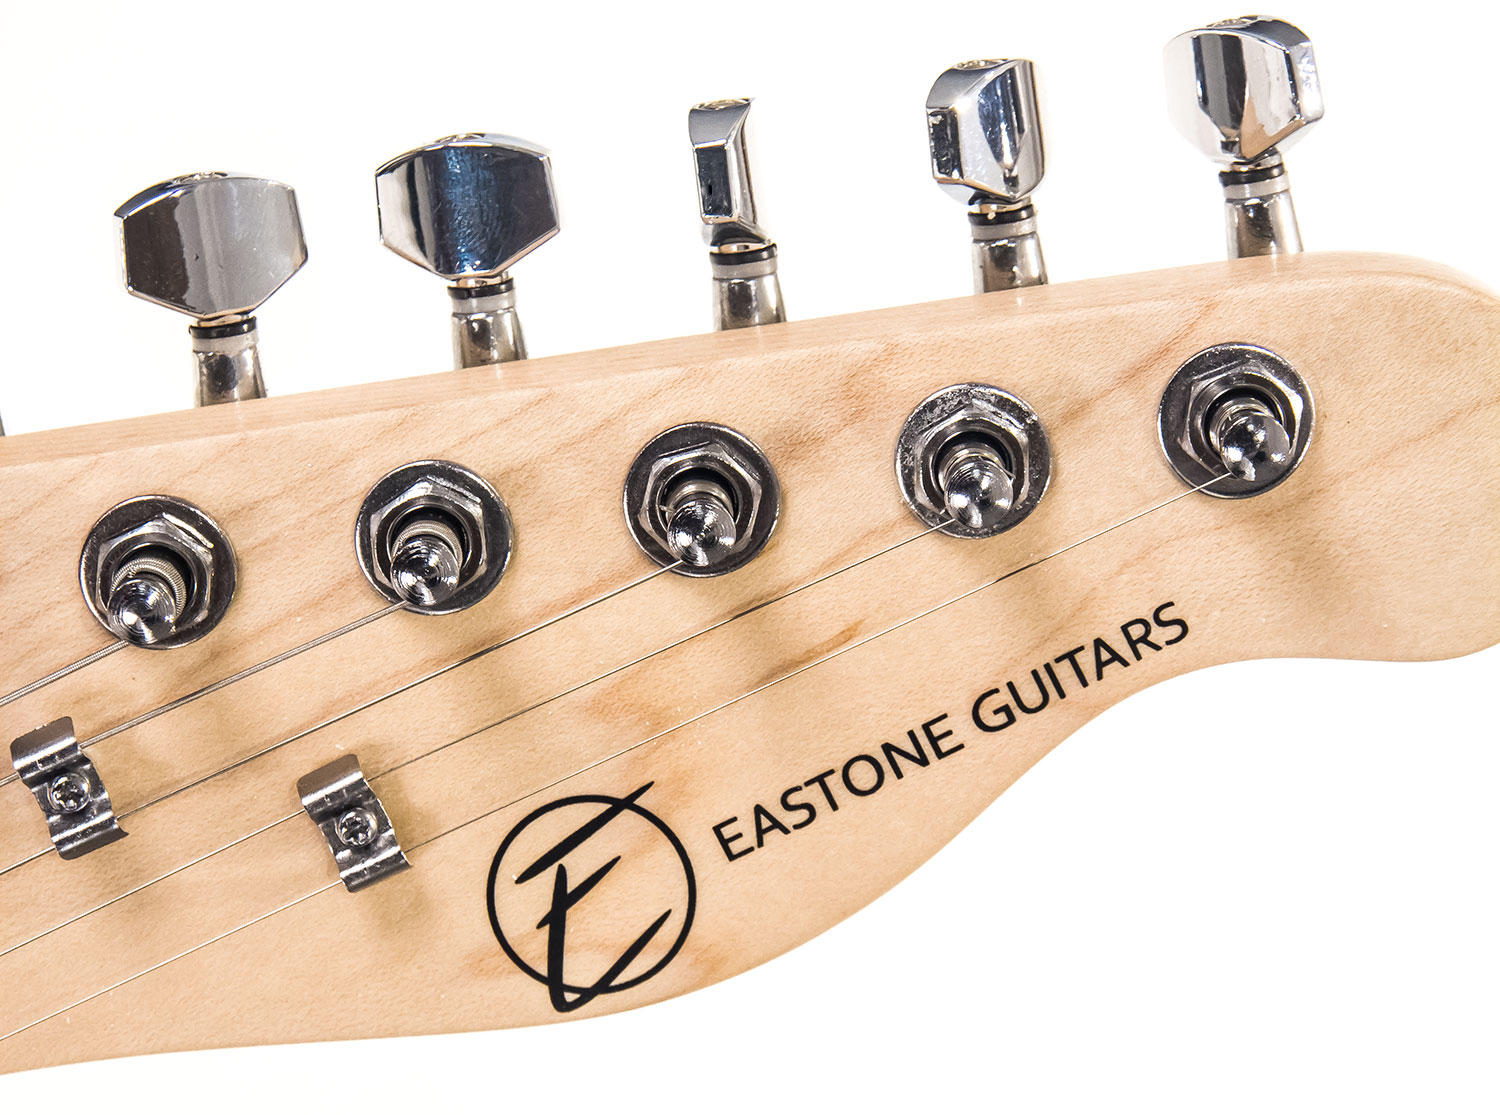 Eastone Tl70 Ss Ht Pur - Metallic Light Blue - Guitarra eléctrica con forma de tel - Variation 3